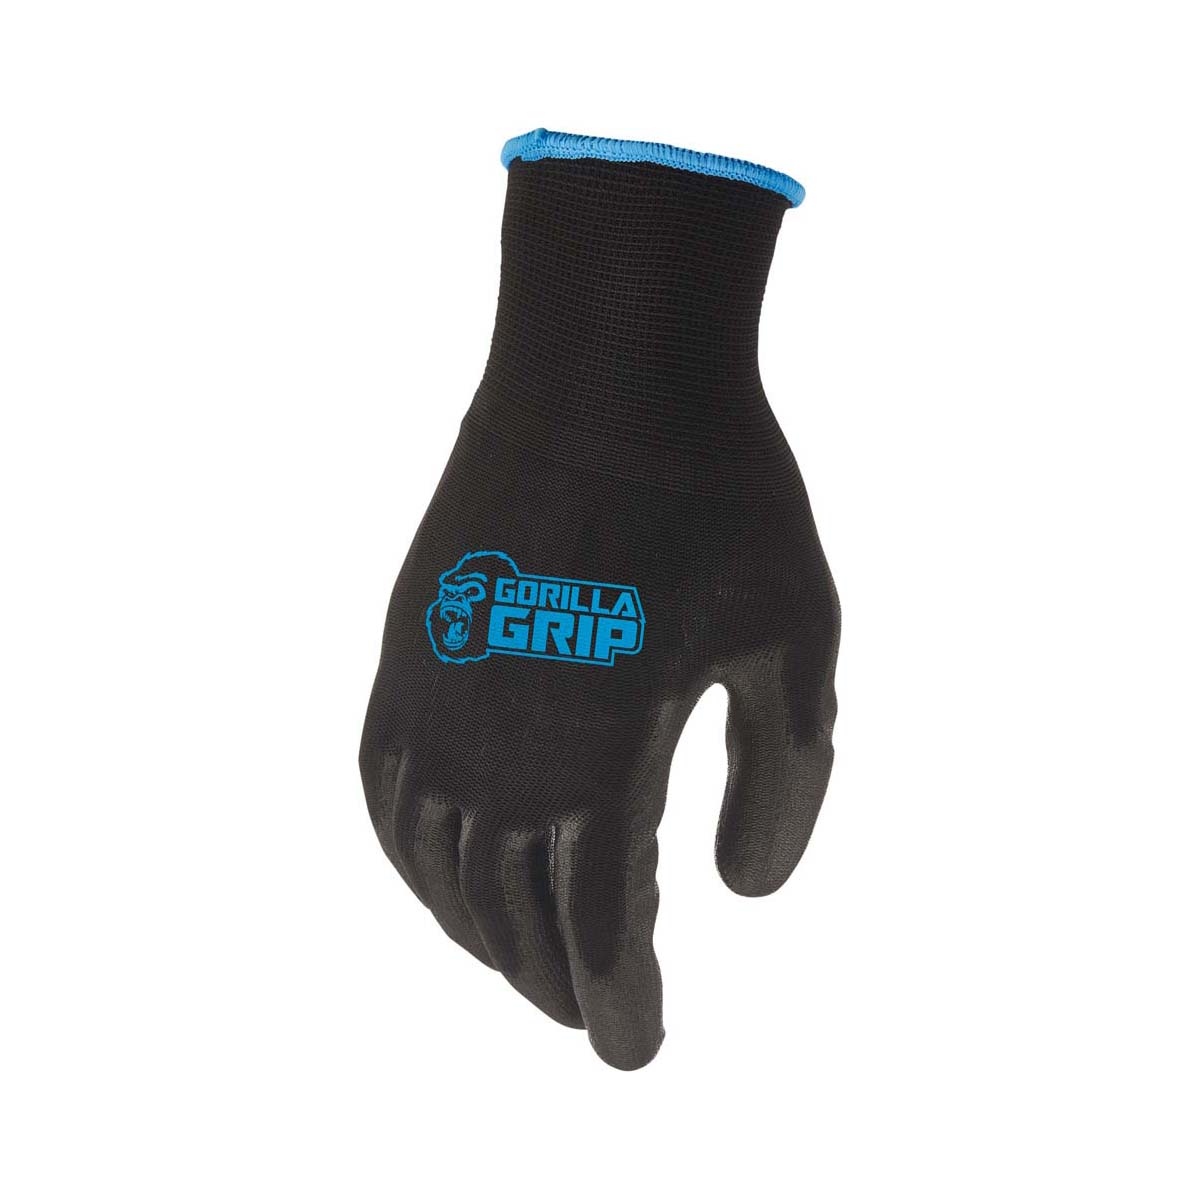 Gorilla Grip Original Fishing Glove L